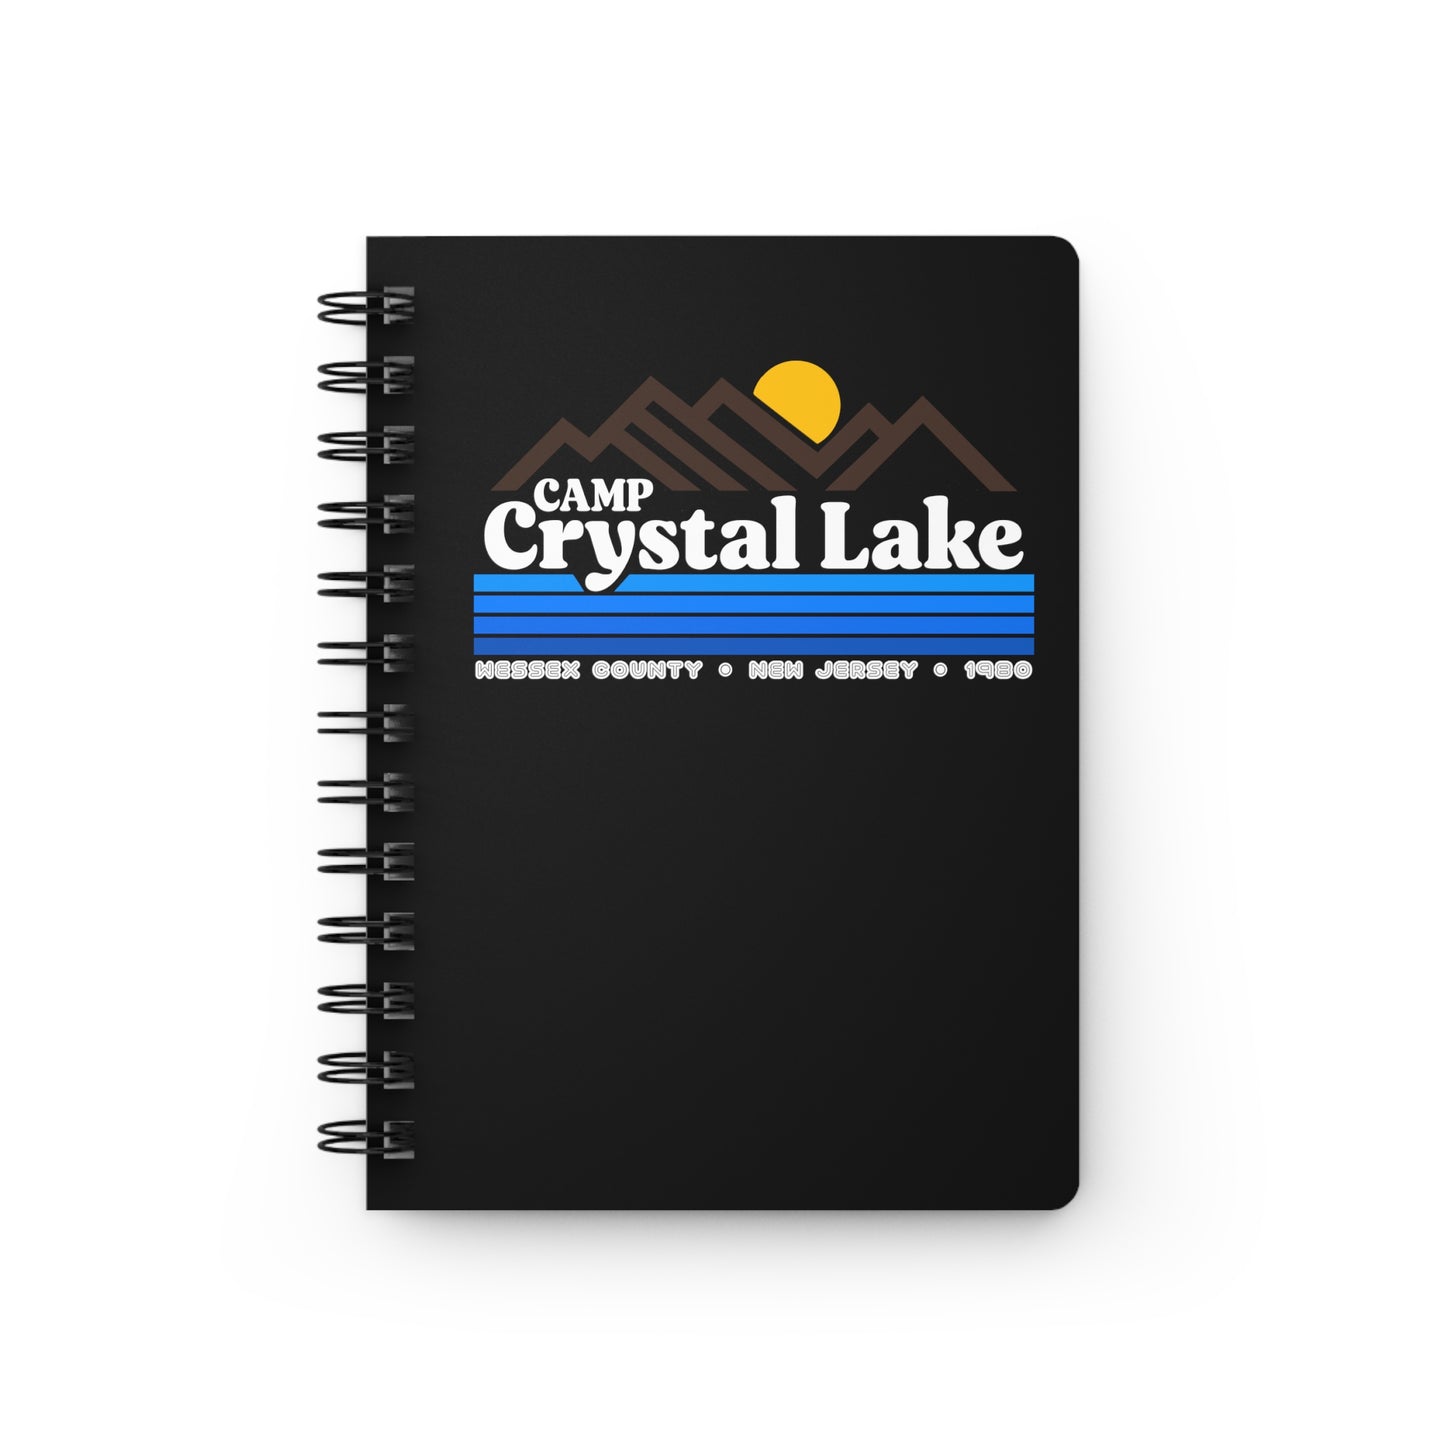 Camp Crystal Lake Spiral Bound Notebook